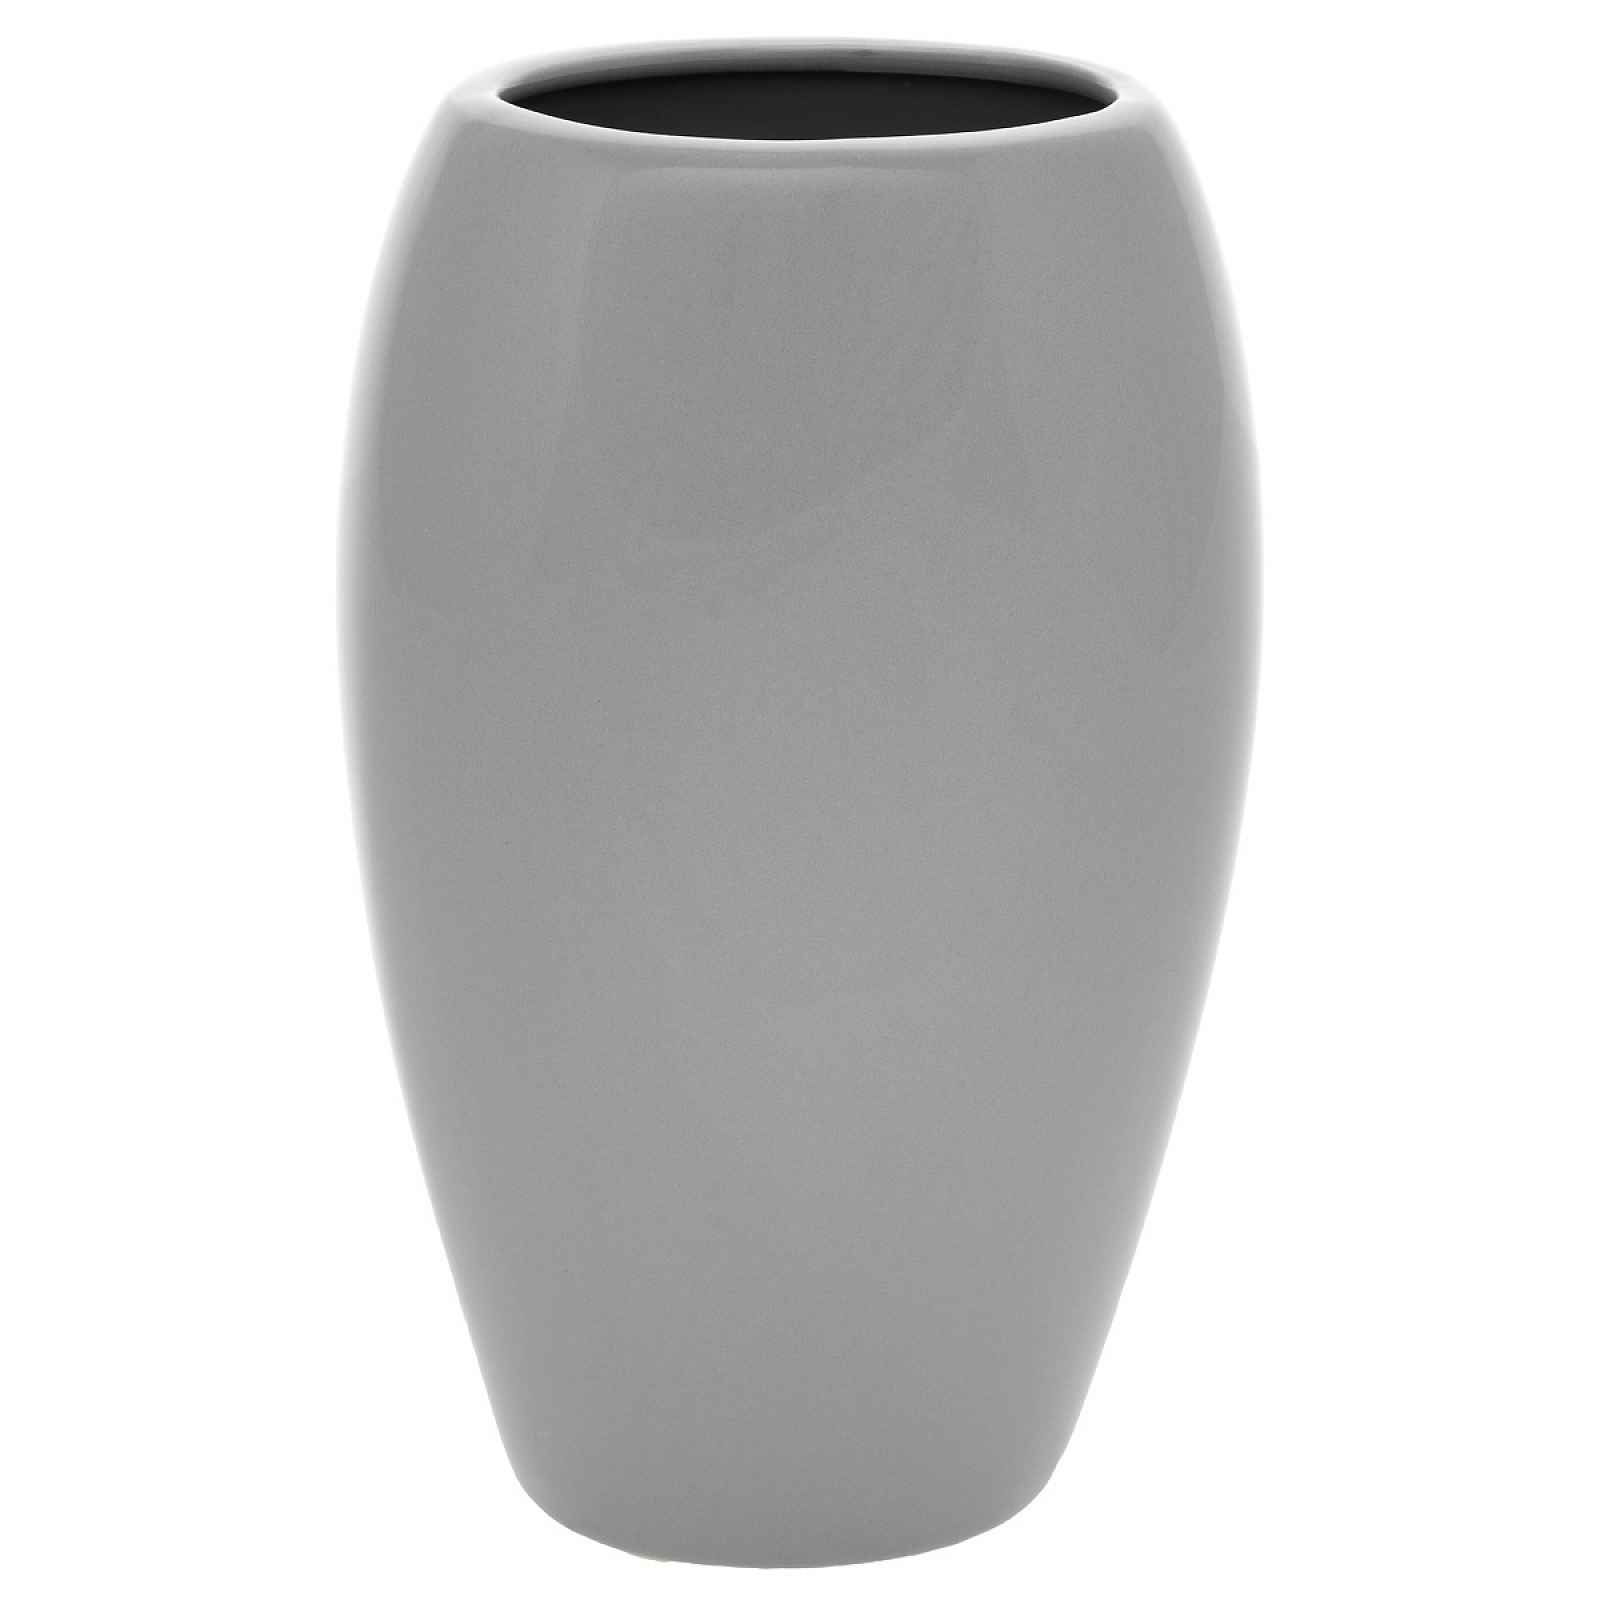 Keramická váza Jar1, 14 x 24 x 10 cm, šedá